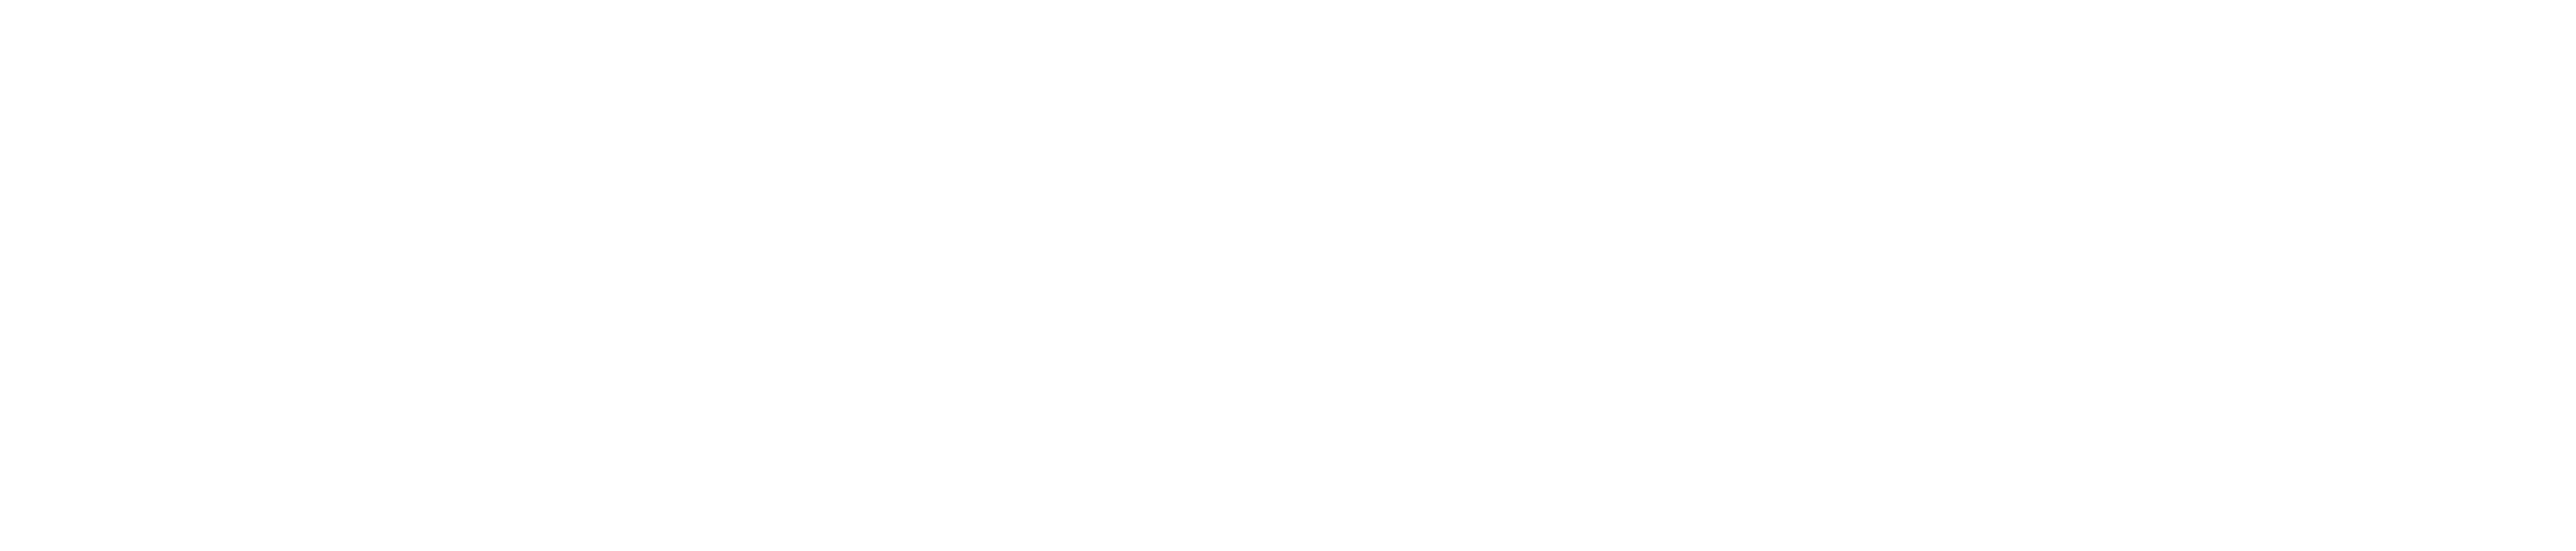 logo Walmeet white